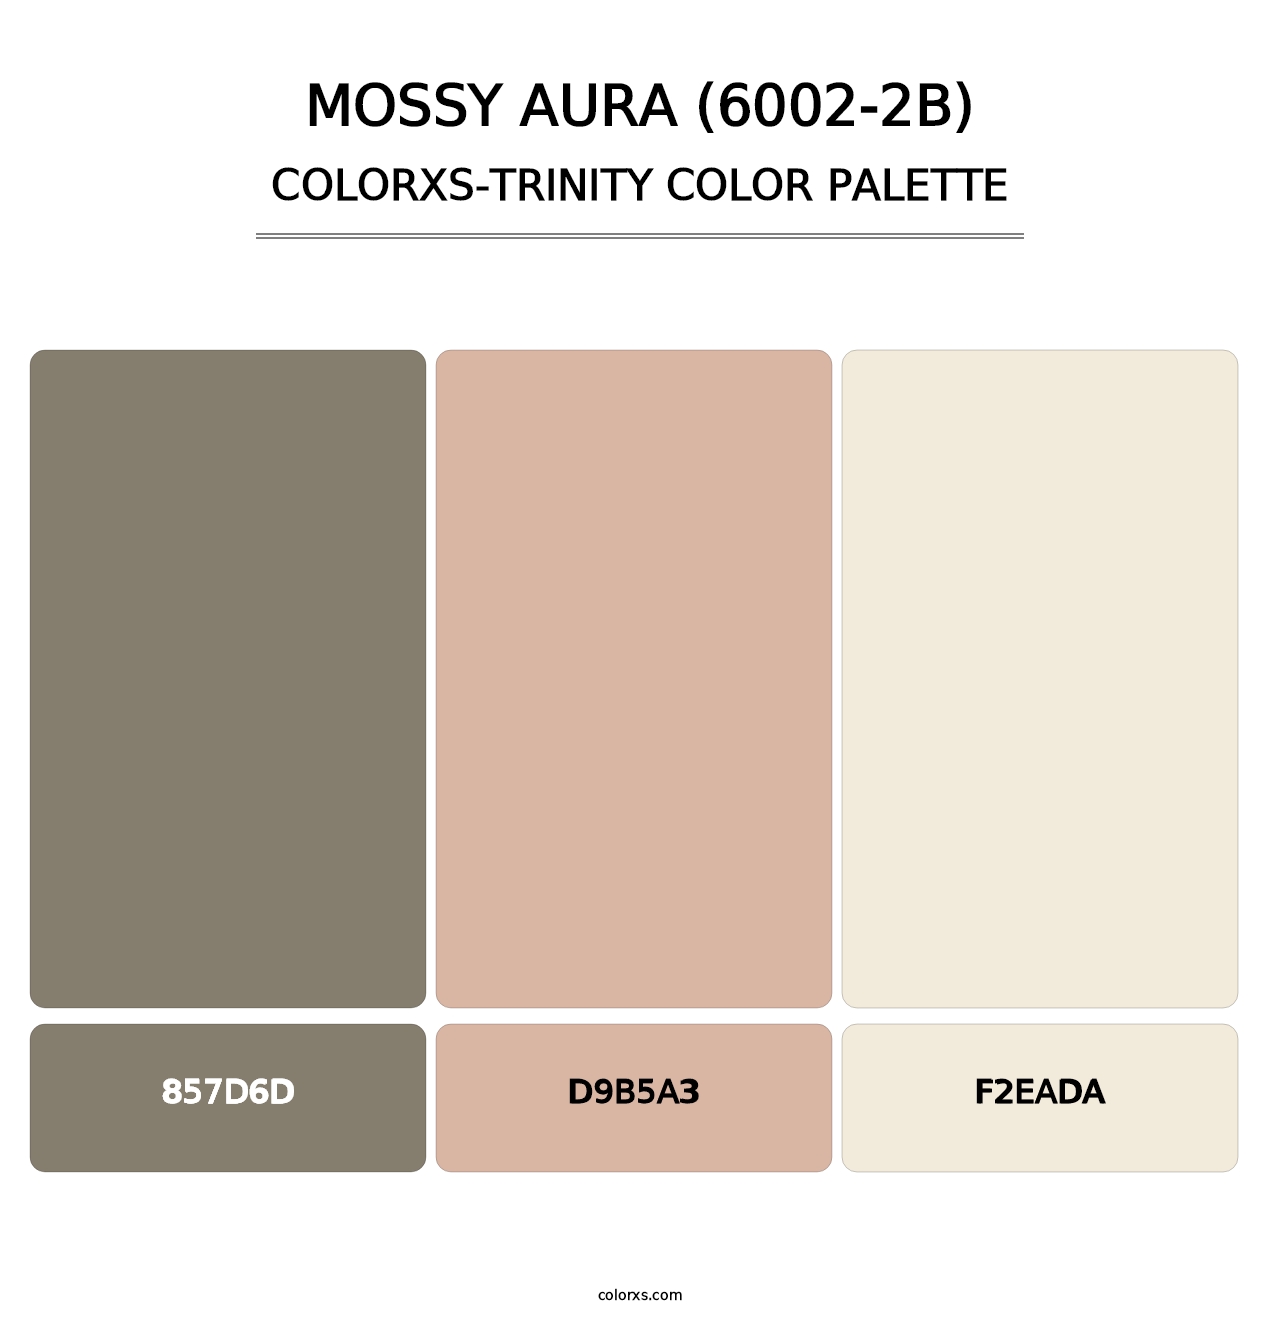 Mossy Aura (6002-2B) - Colorxs Trinity Palette